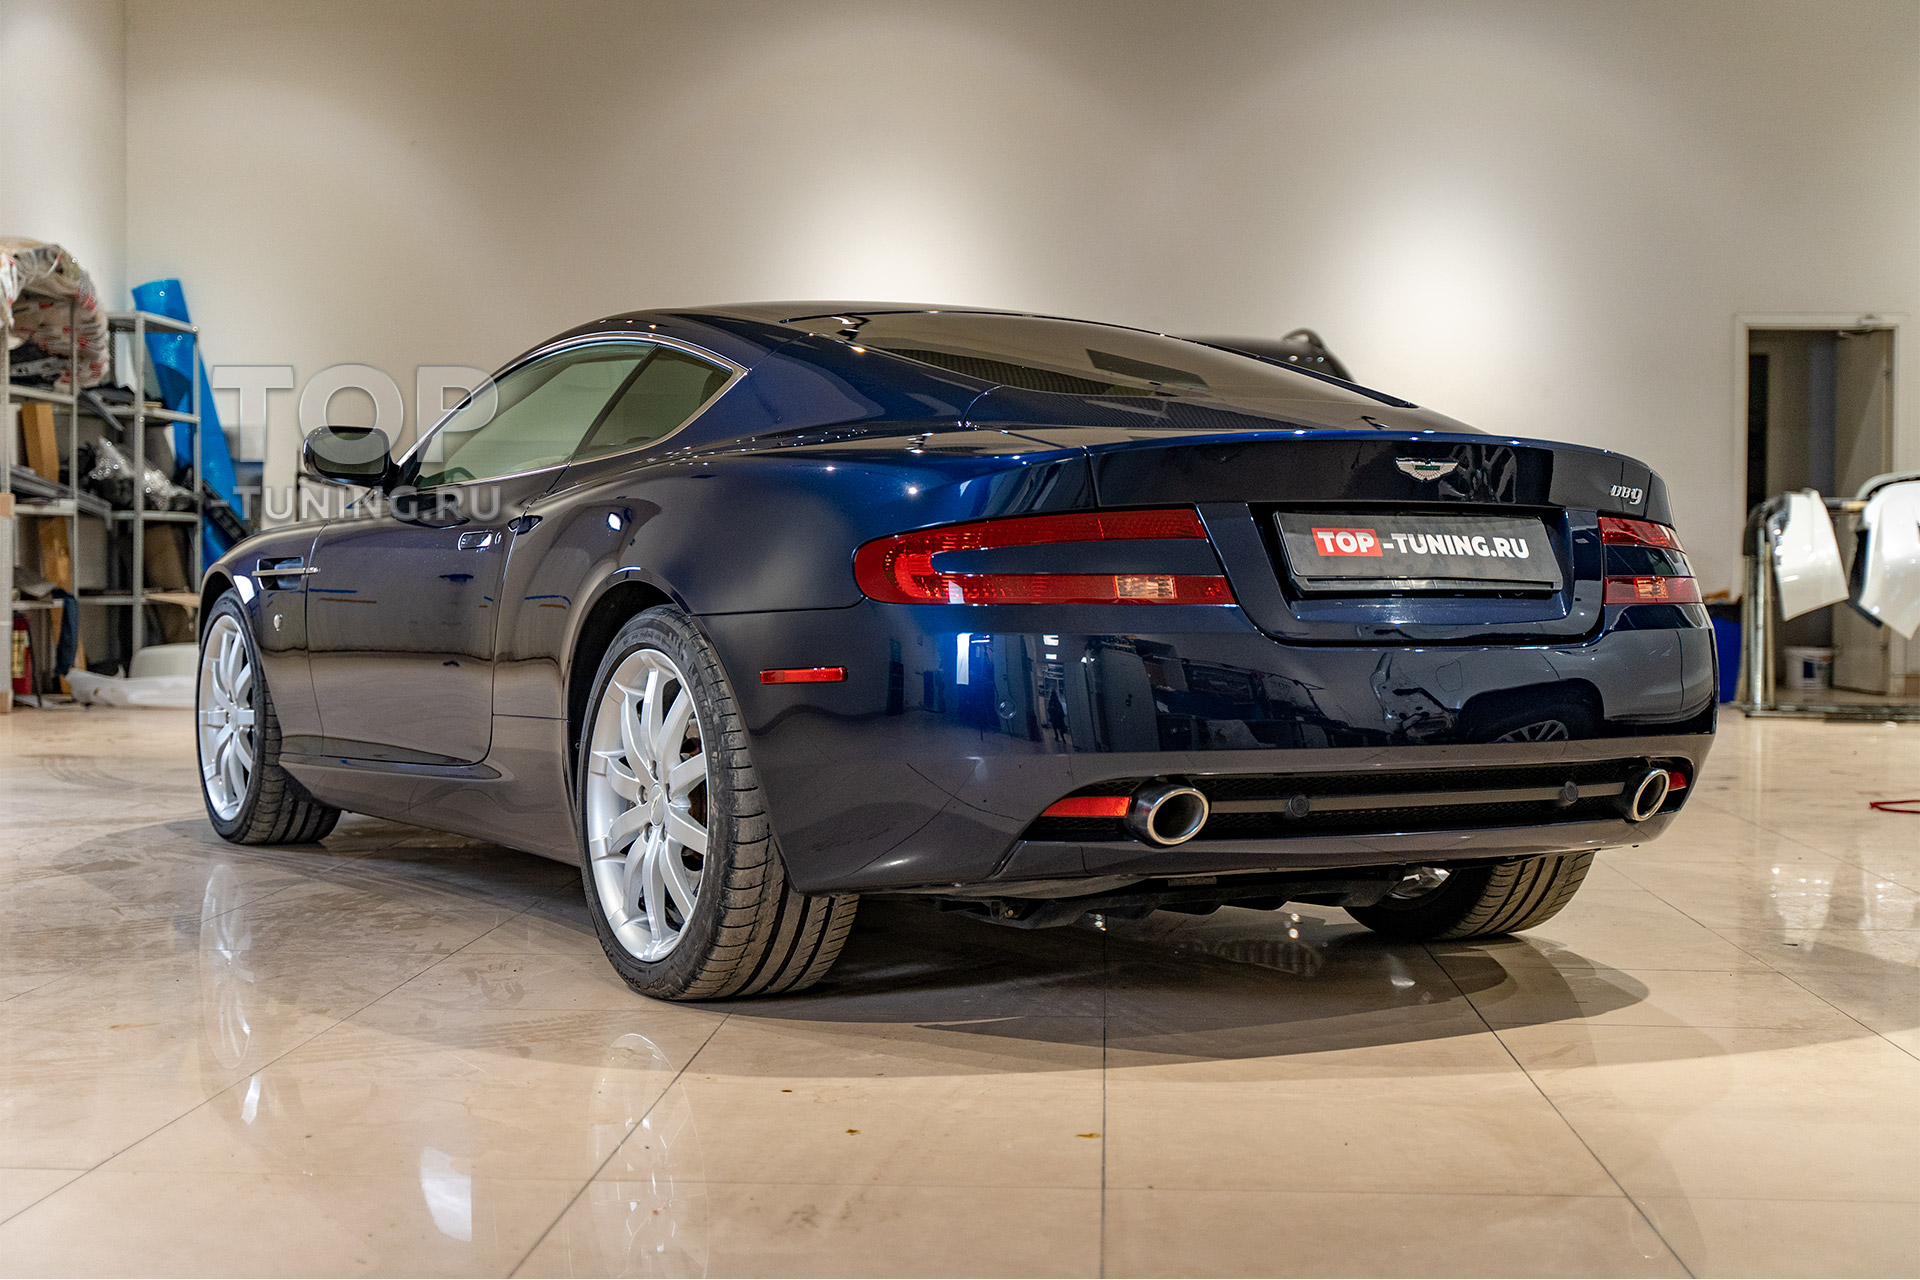 Детейлинг кузова и реставрация салона Aston Martin DB9